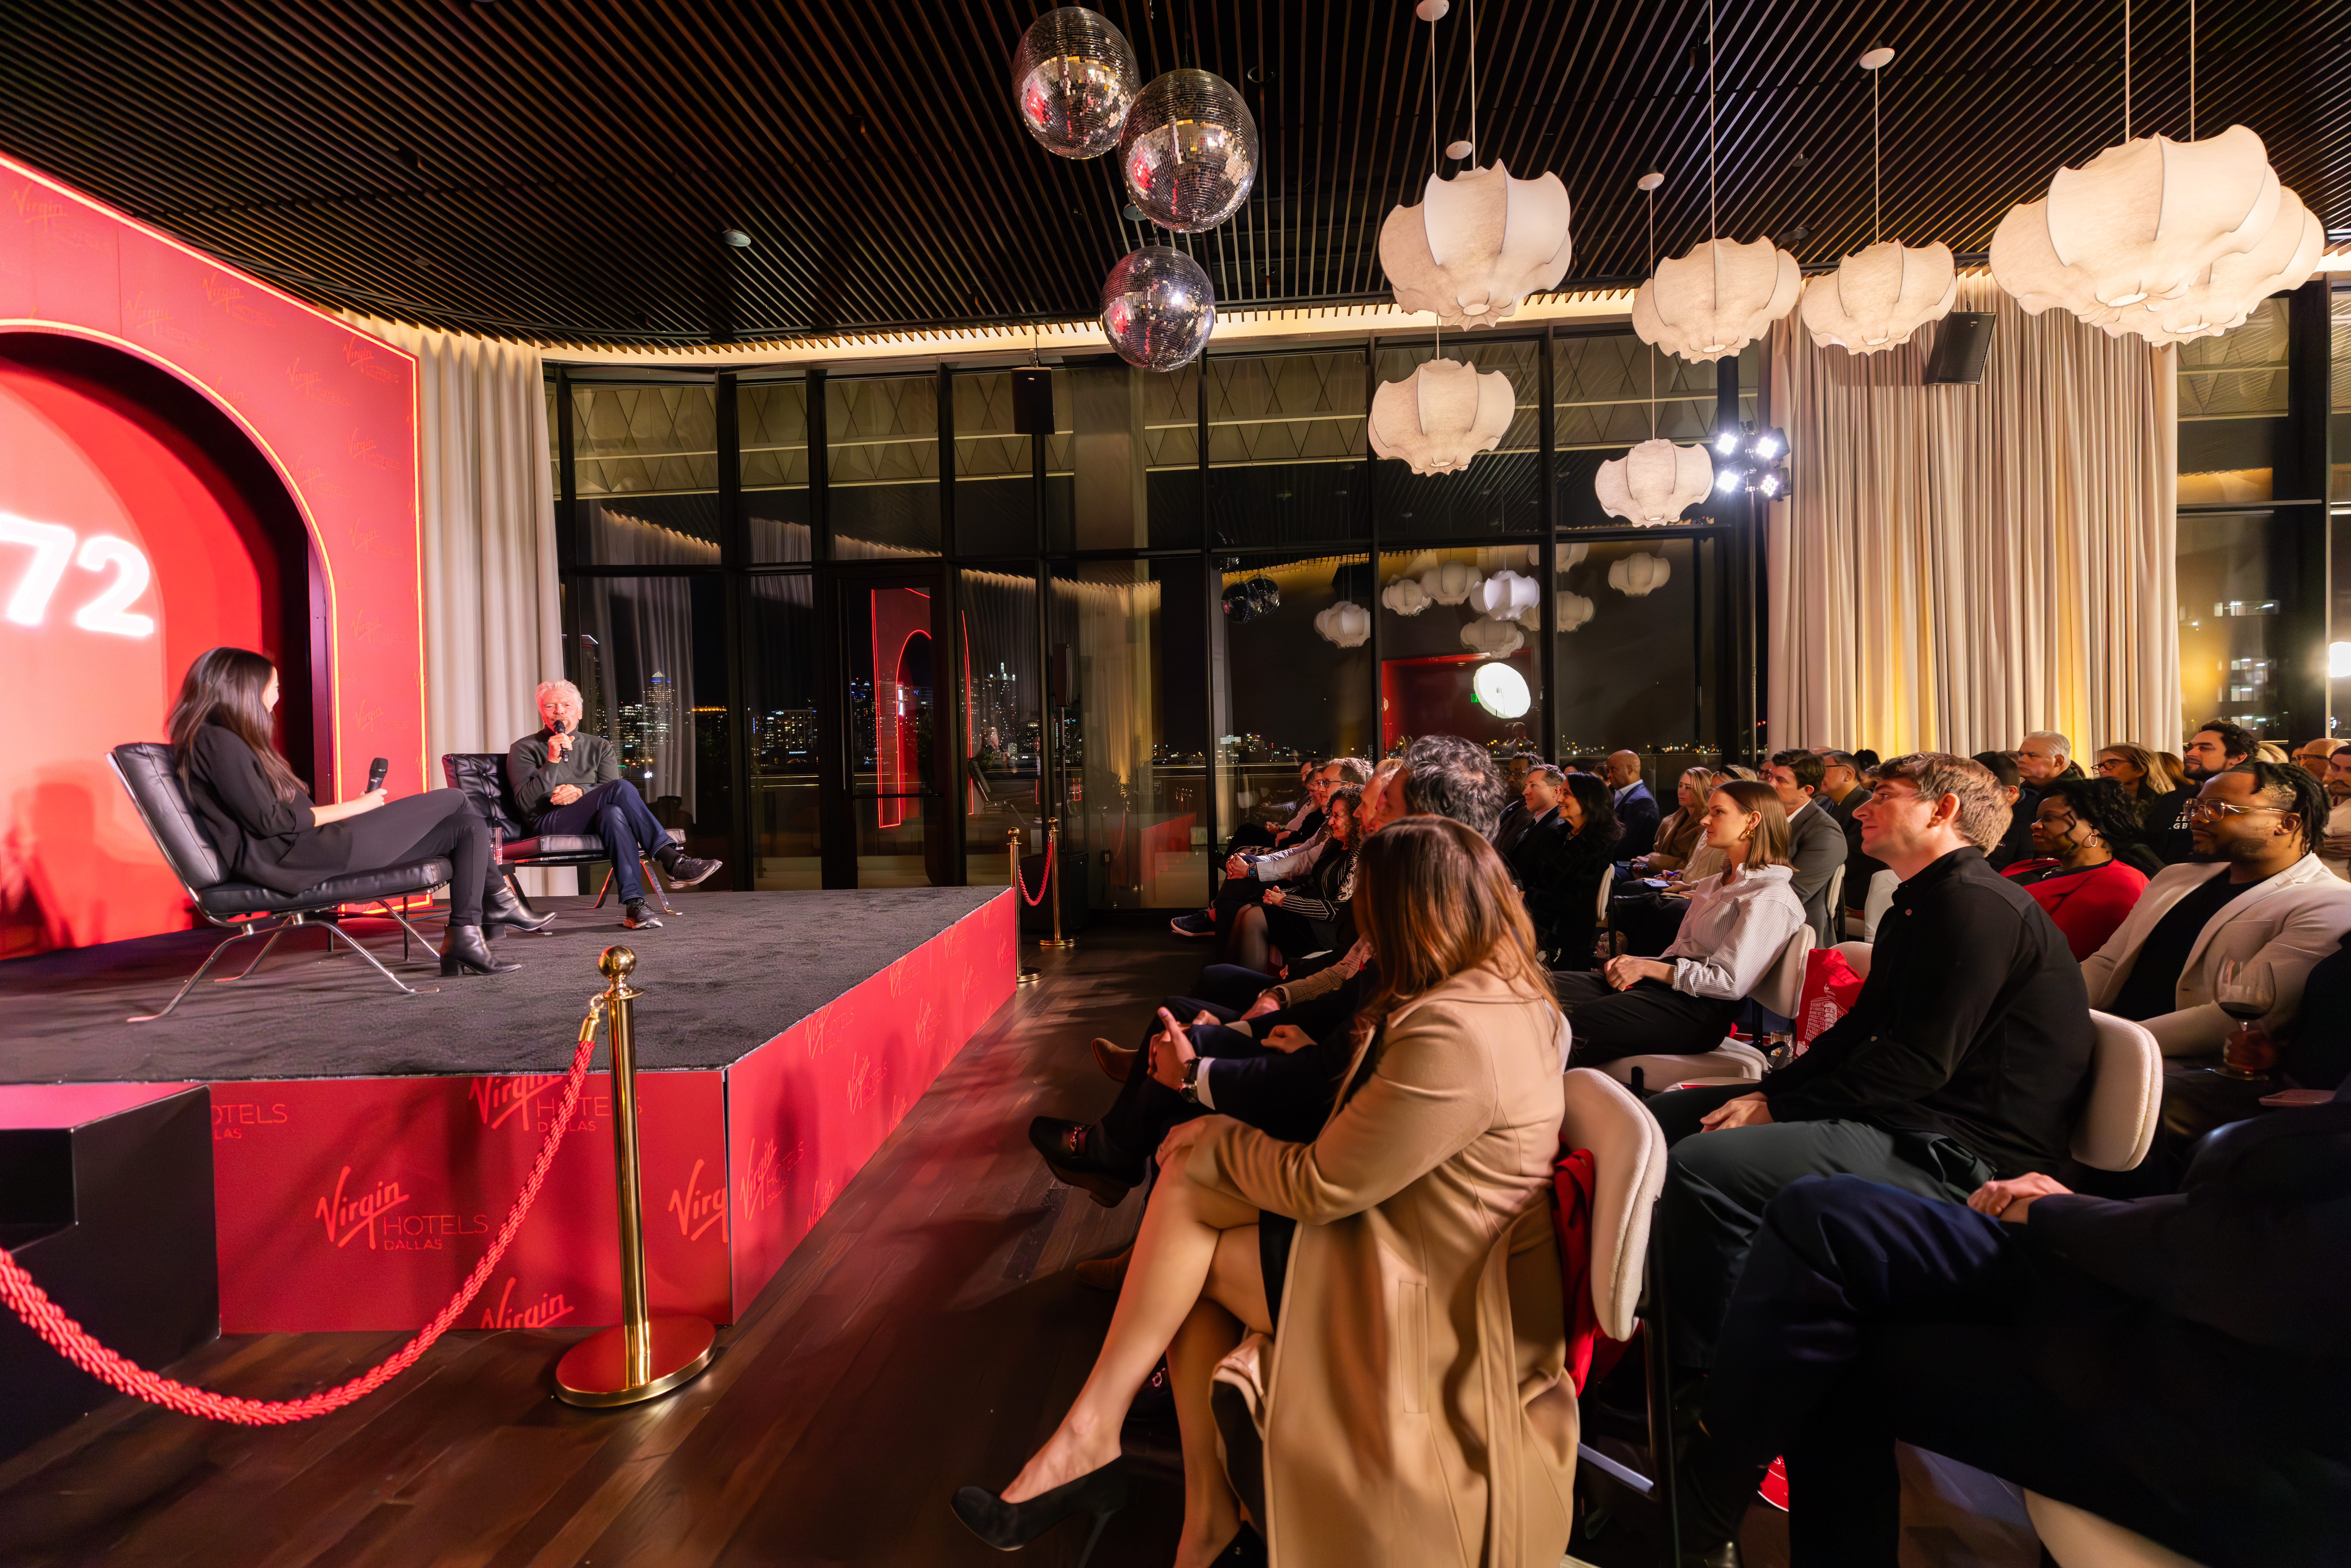 Richard Branson at Virgin Hotels Dallas, speaking at an RM72 entrepreneurship event